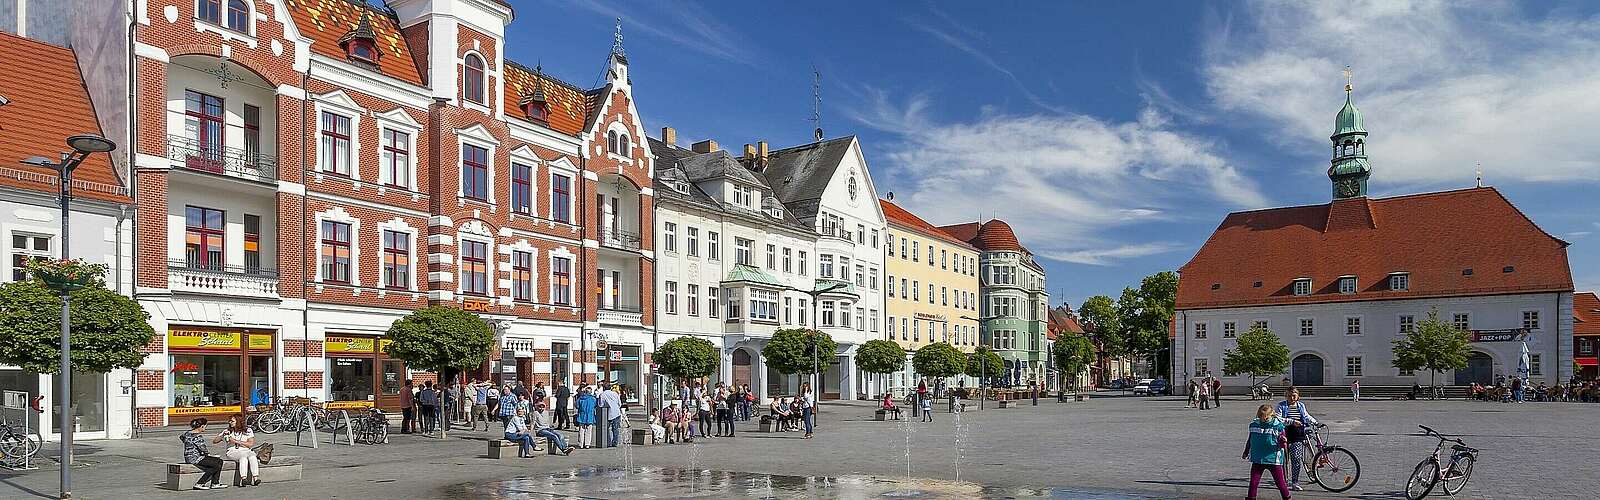 Marktplatz in Finsterwalde,
        
    

        Foto: Fotograf / Lizenz - Media Import/Andreas Franke